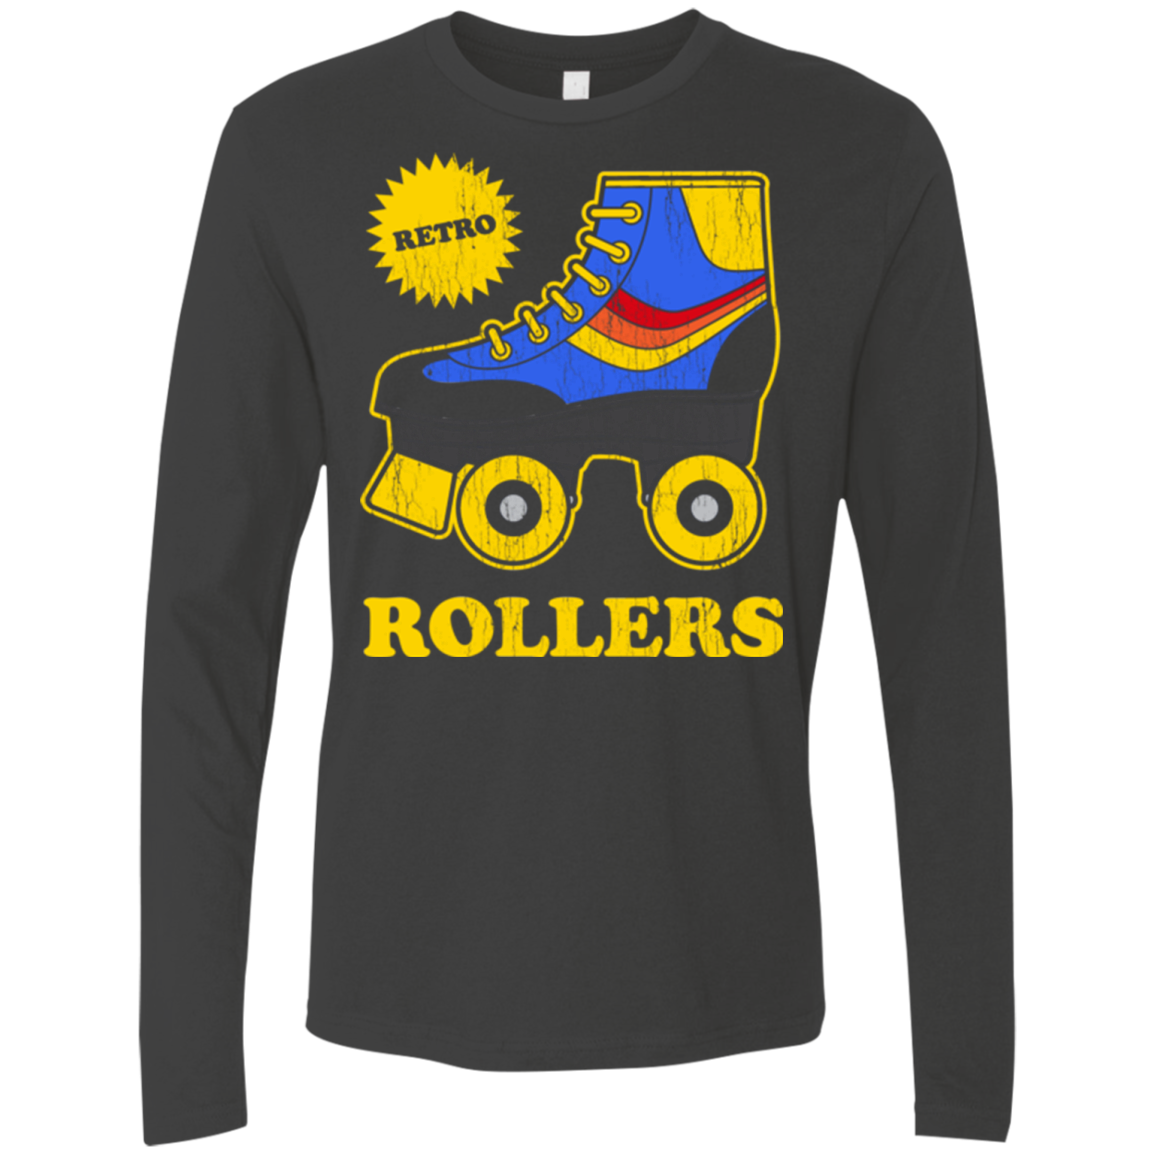 Retro rollers Men's Premium Long Sleeve